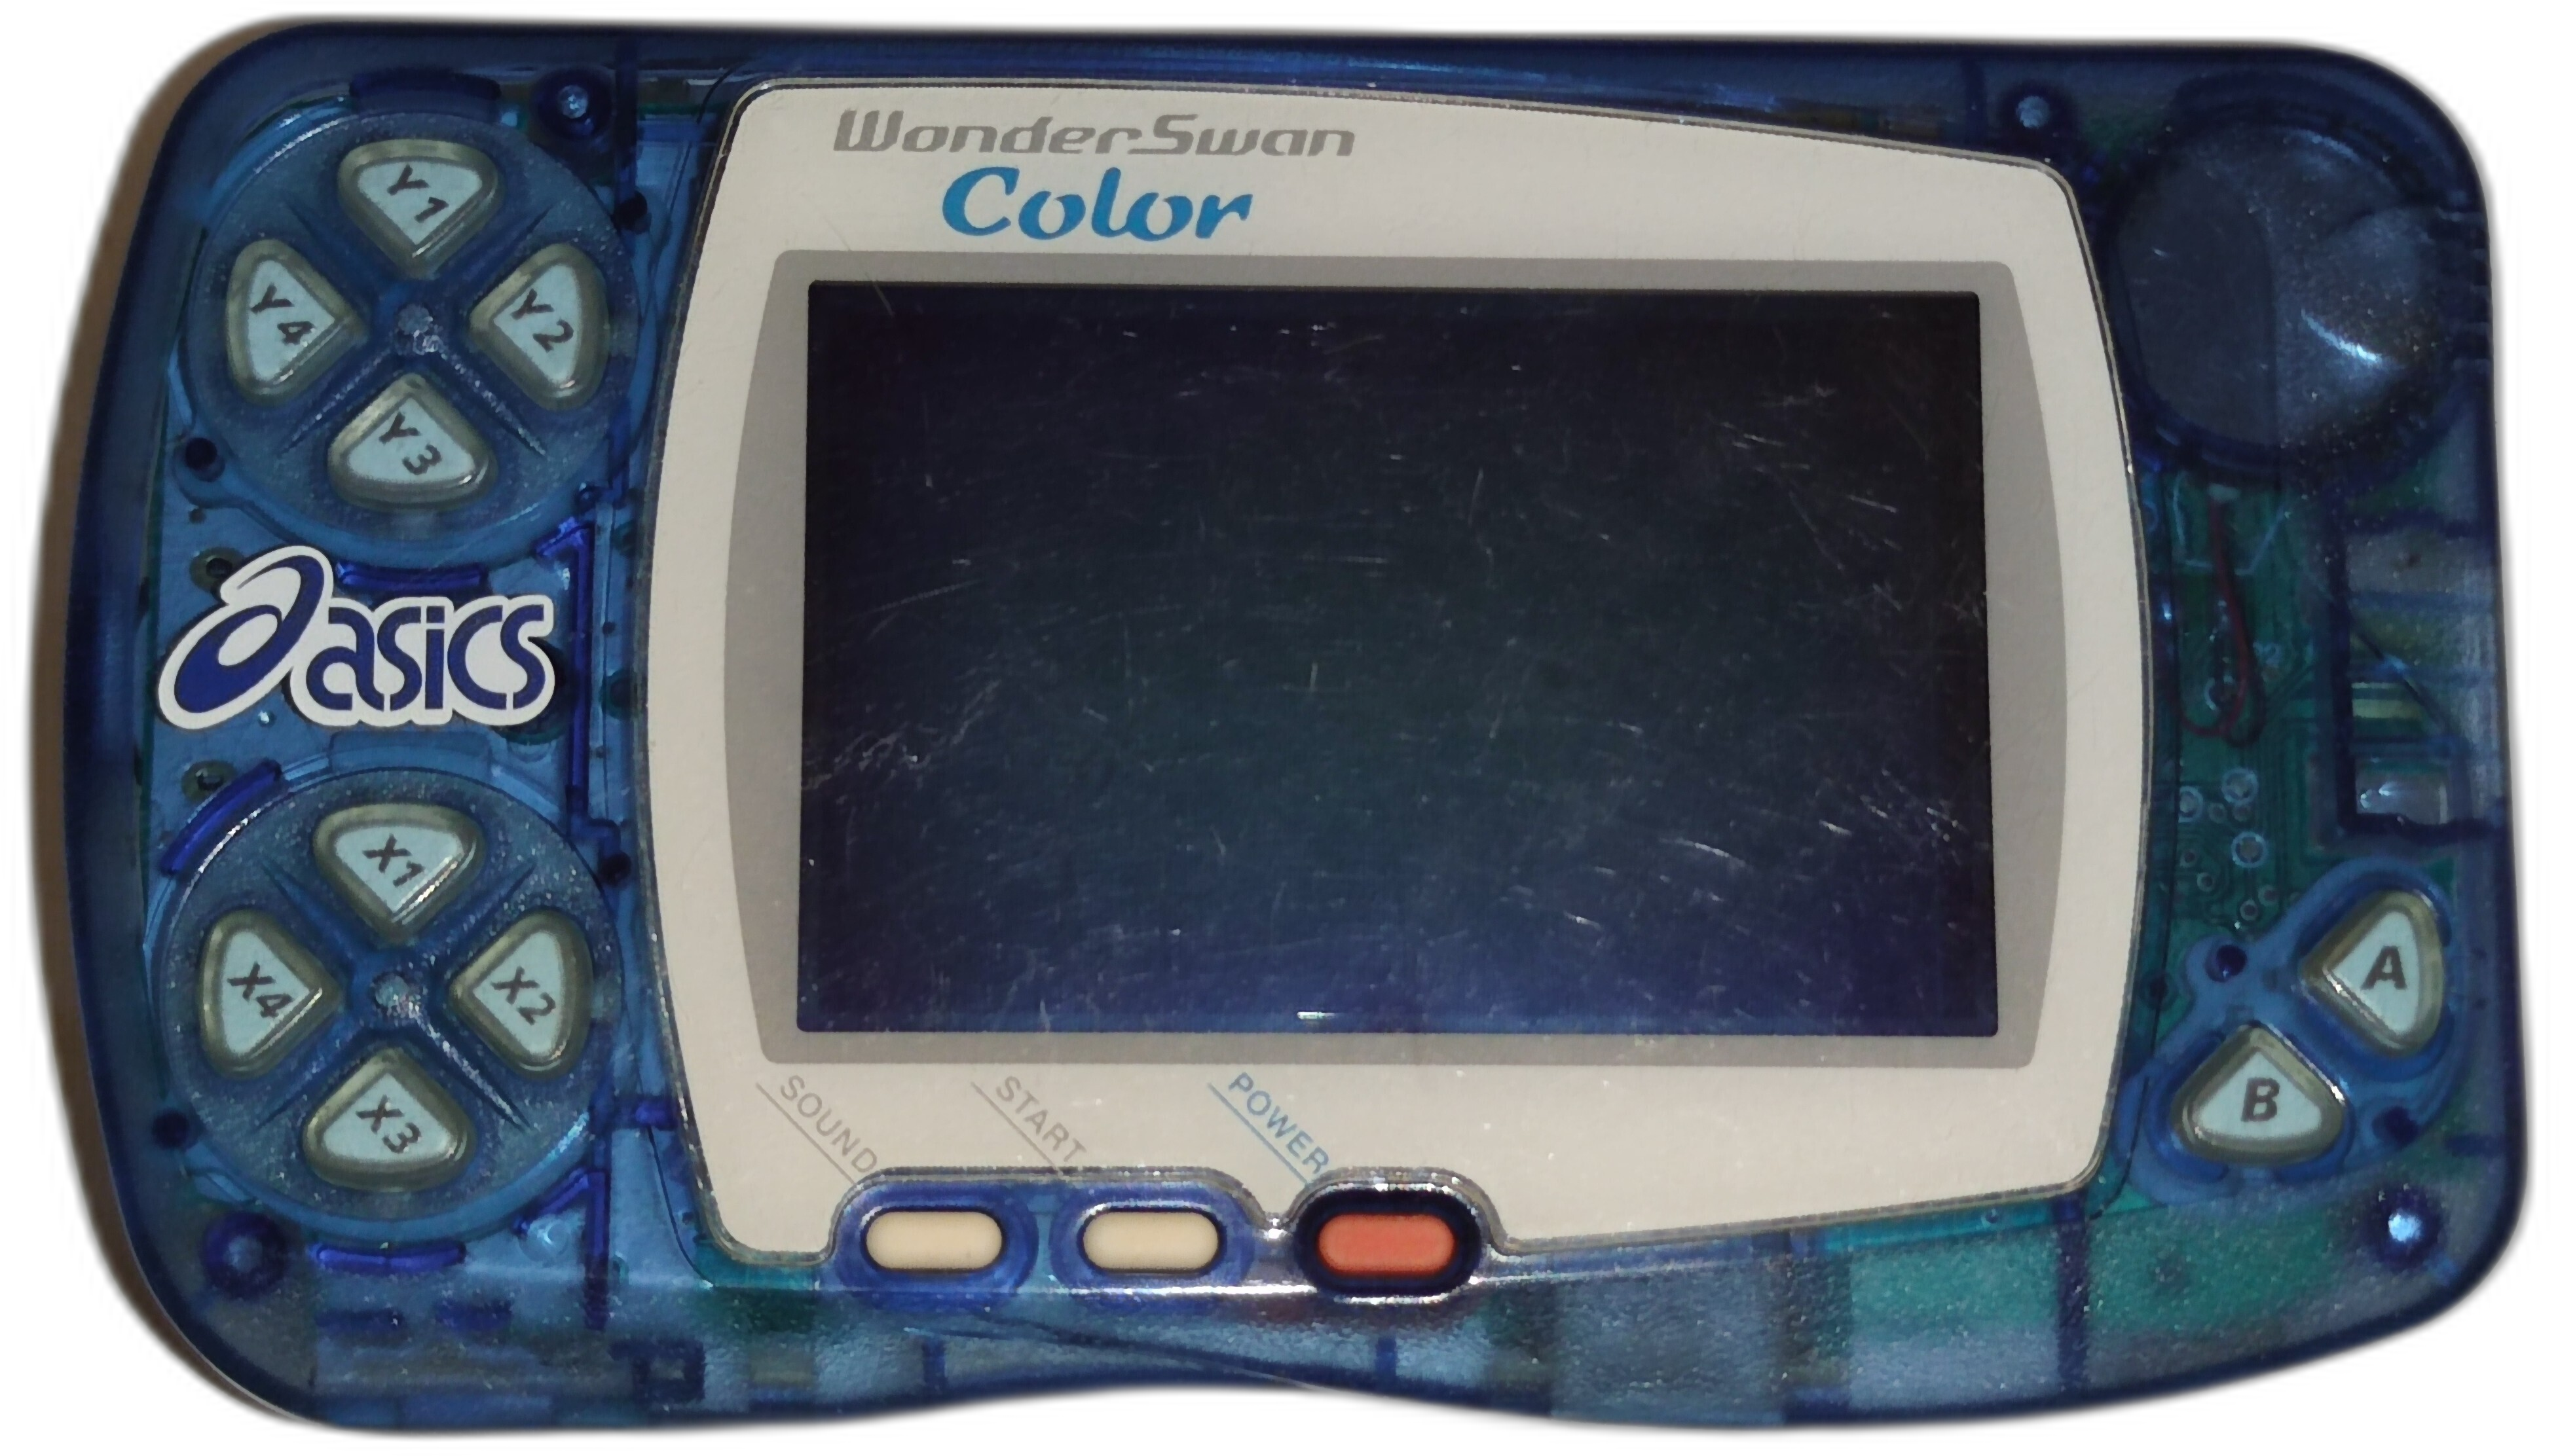  Bandai Wonderswan Color  Asics Console